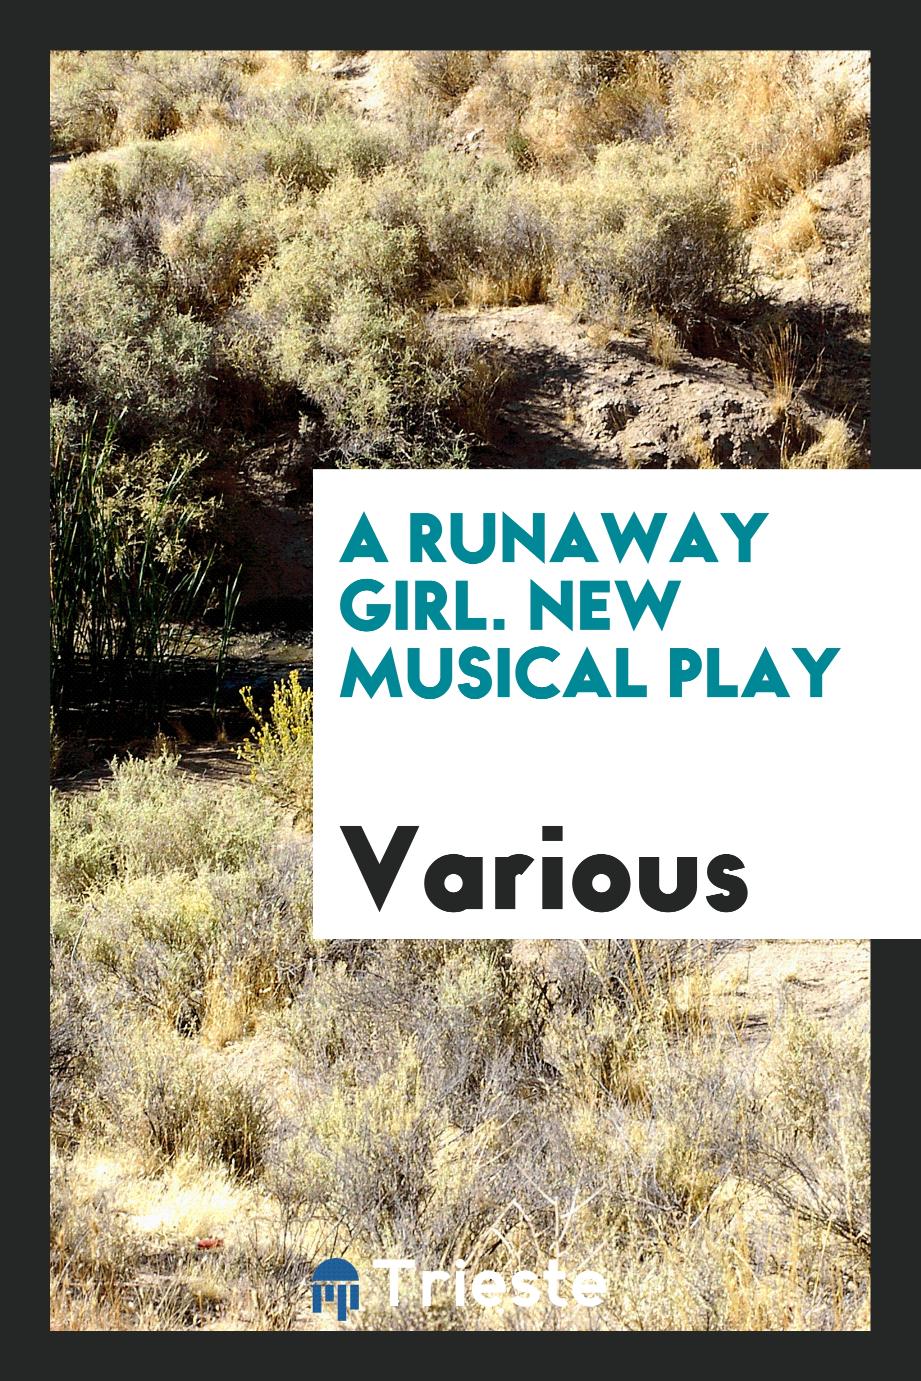 A Runaway Girl. New Musical Play